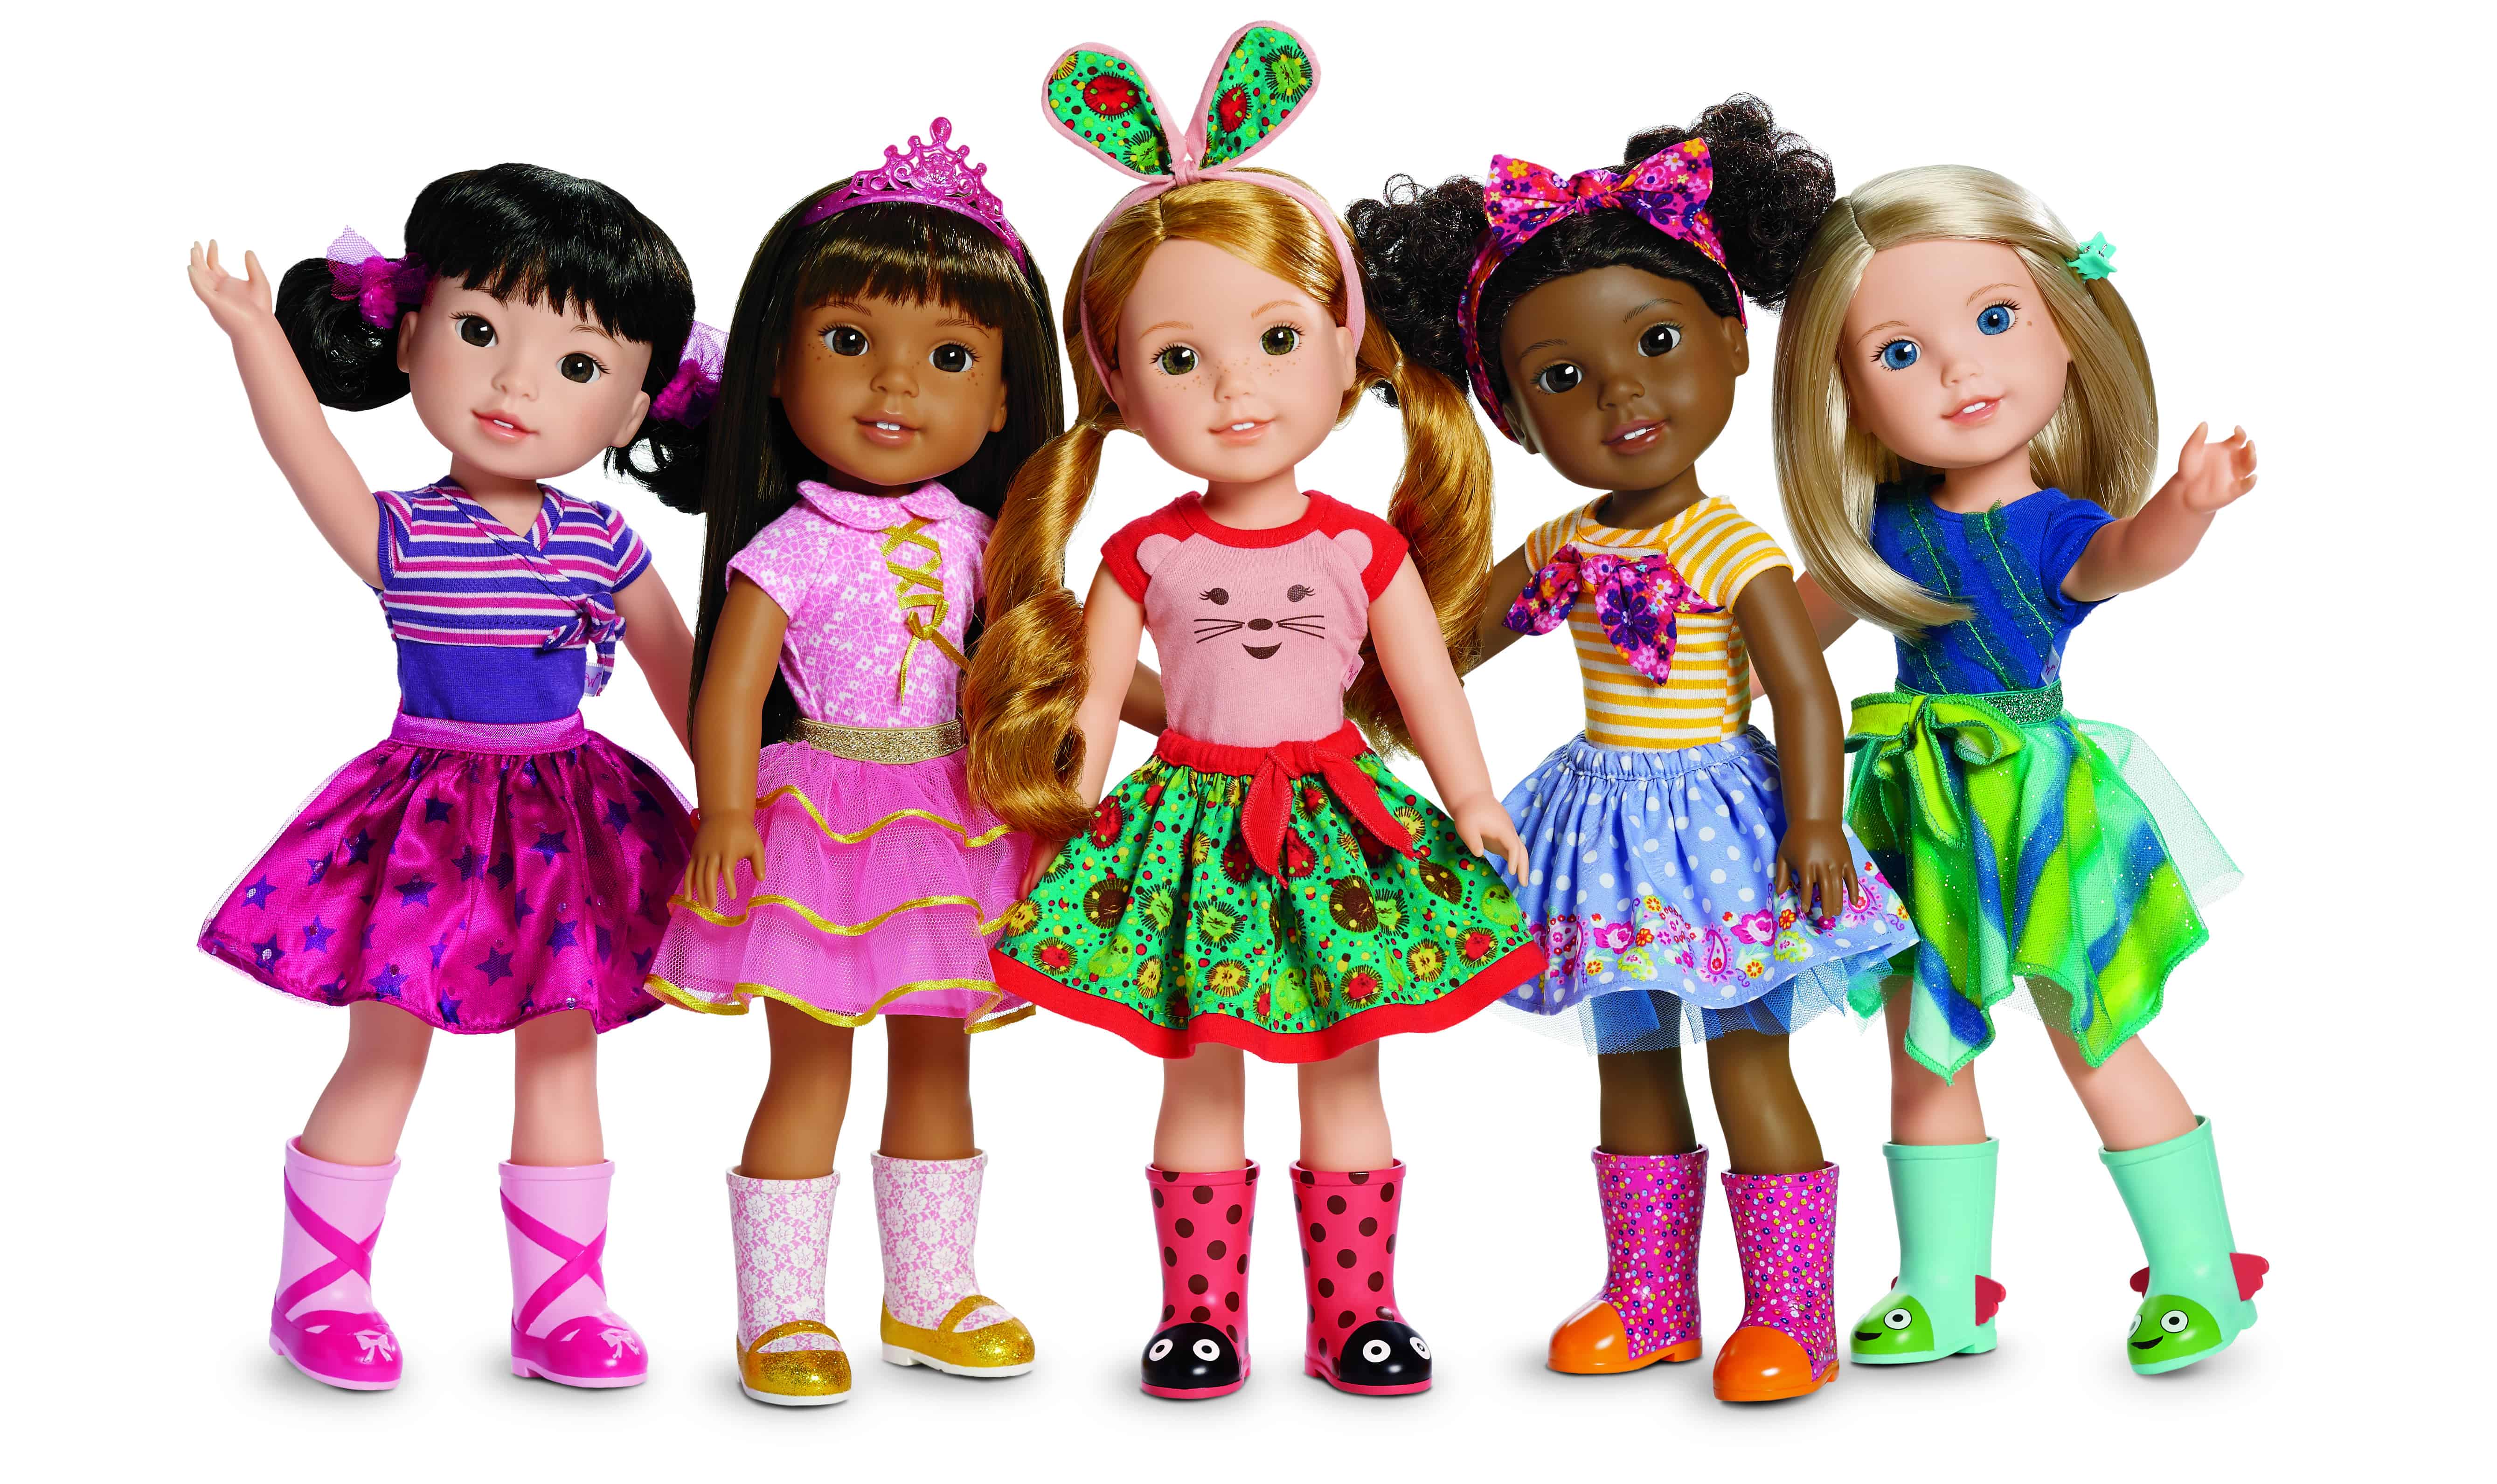 Включи кукла игрушки. Американ гёрл. Куклы для девочек. Современные куклы. Популярные куклы.